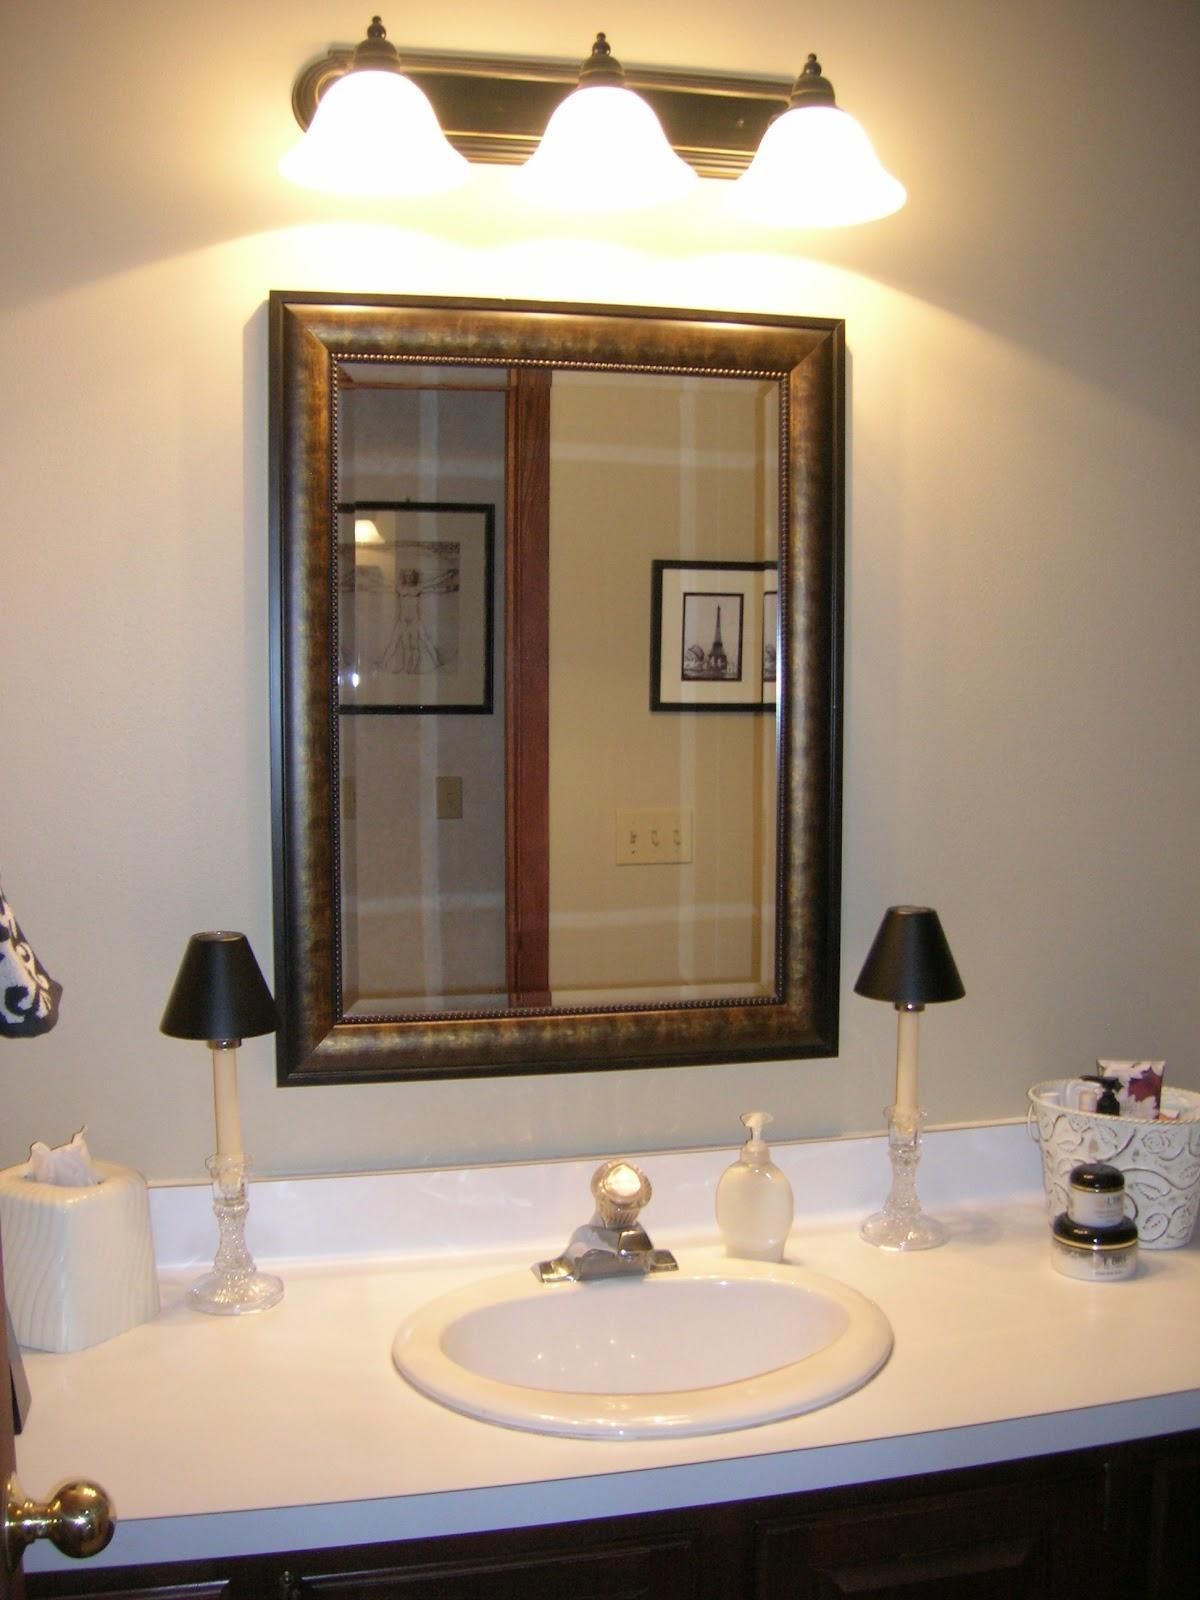 Marvelous Bathroom Mirror Lights 2017 Design – Bathroom Vanity In Bathroom Lights And Mirrors (View 3 of 20)